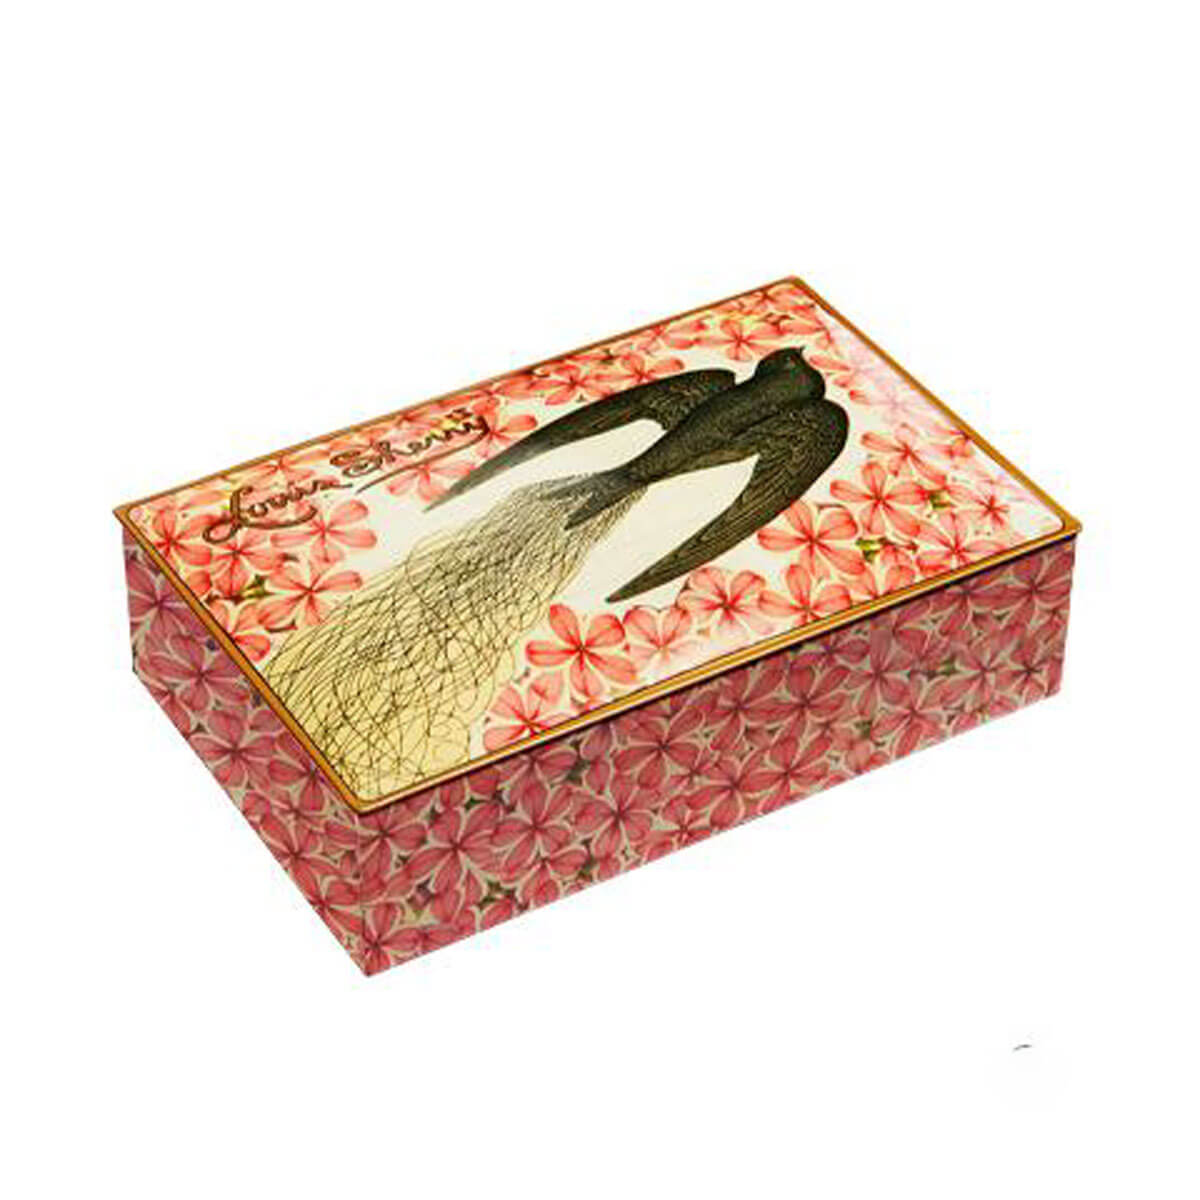 Louis Sherry Chocolates Blackbird by John Derian front | MILK MONEY milkmoney.co | white elephant gift ideas, gift, mother's day gift ideas, white elephant gift, gift shops near me